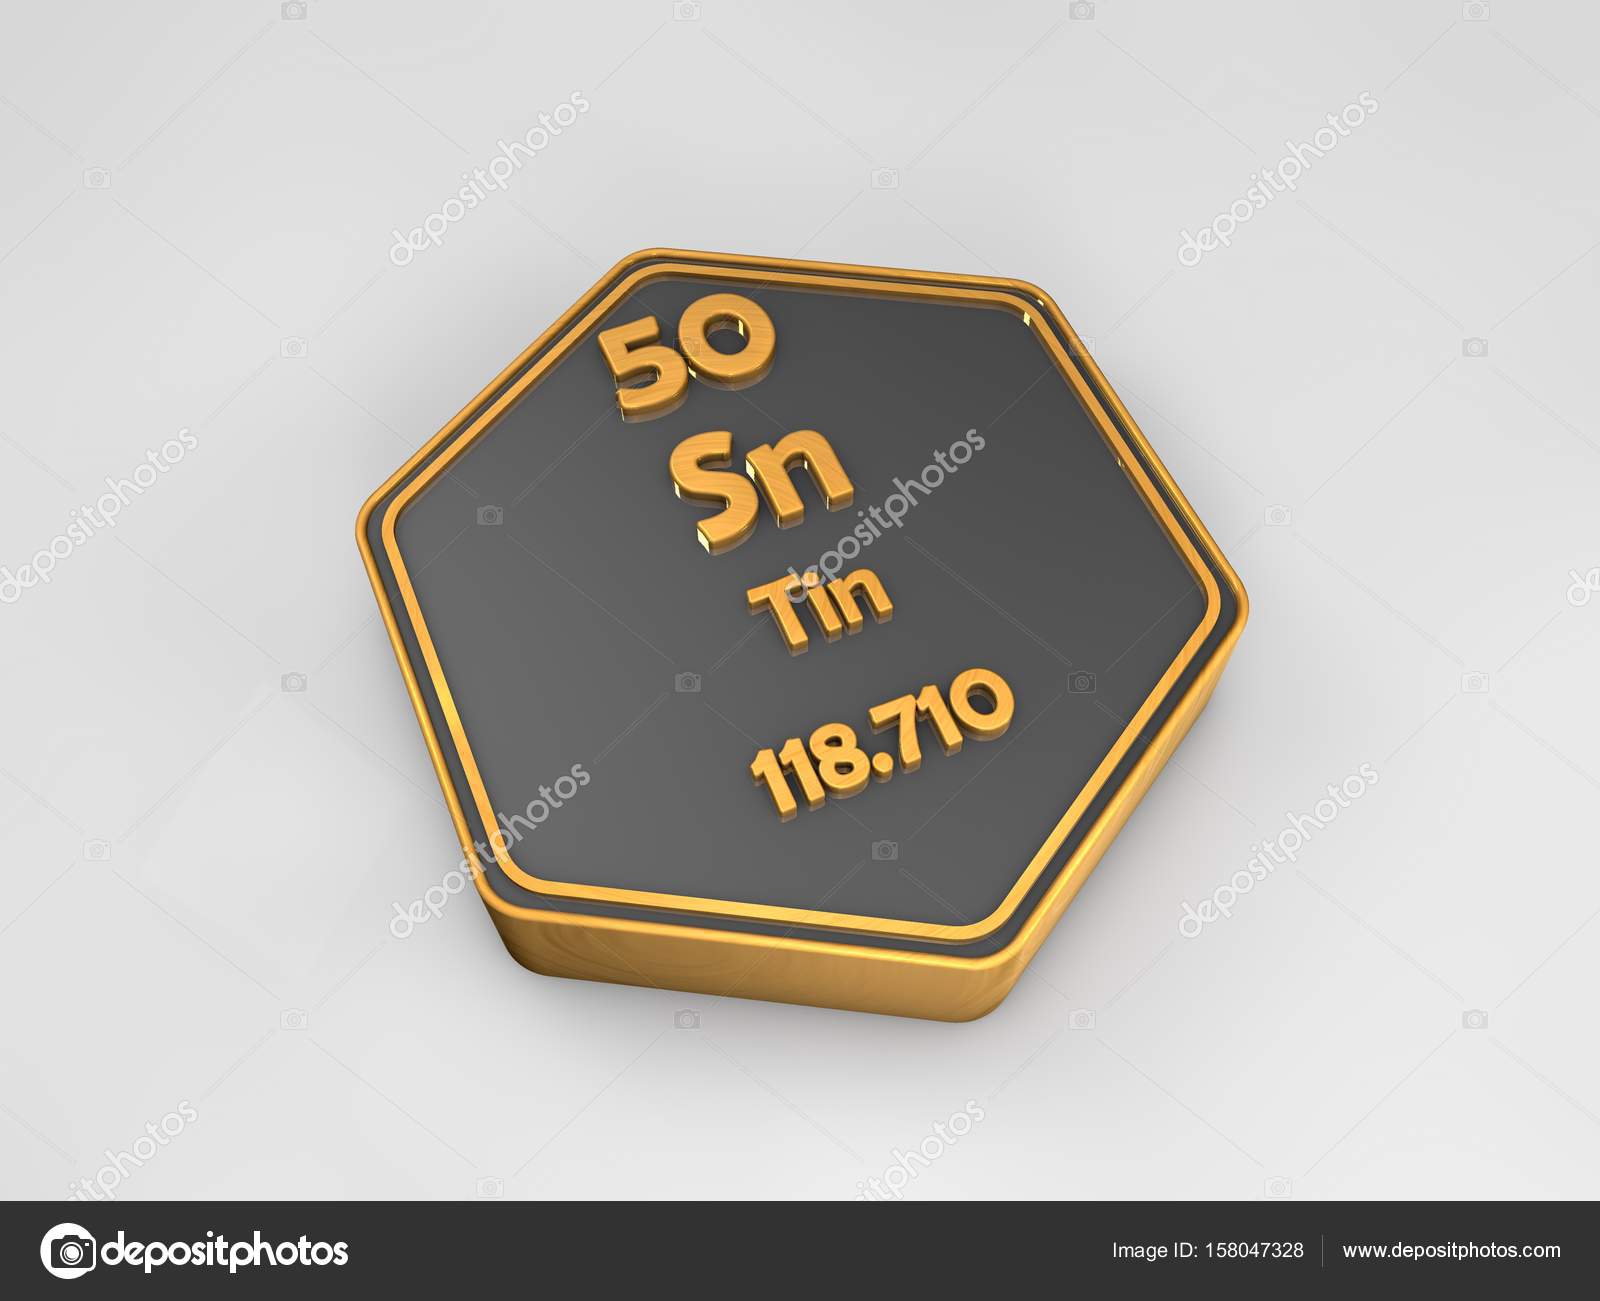 tin element on periodic table